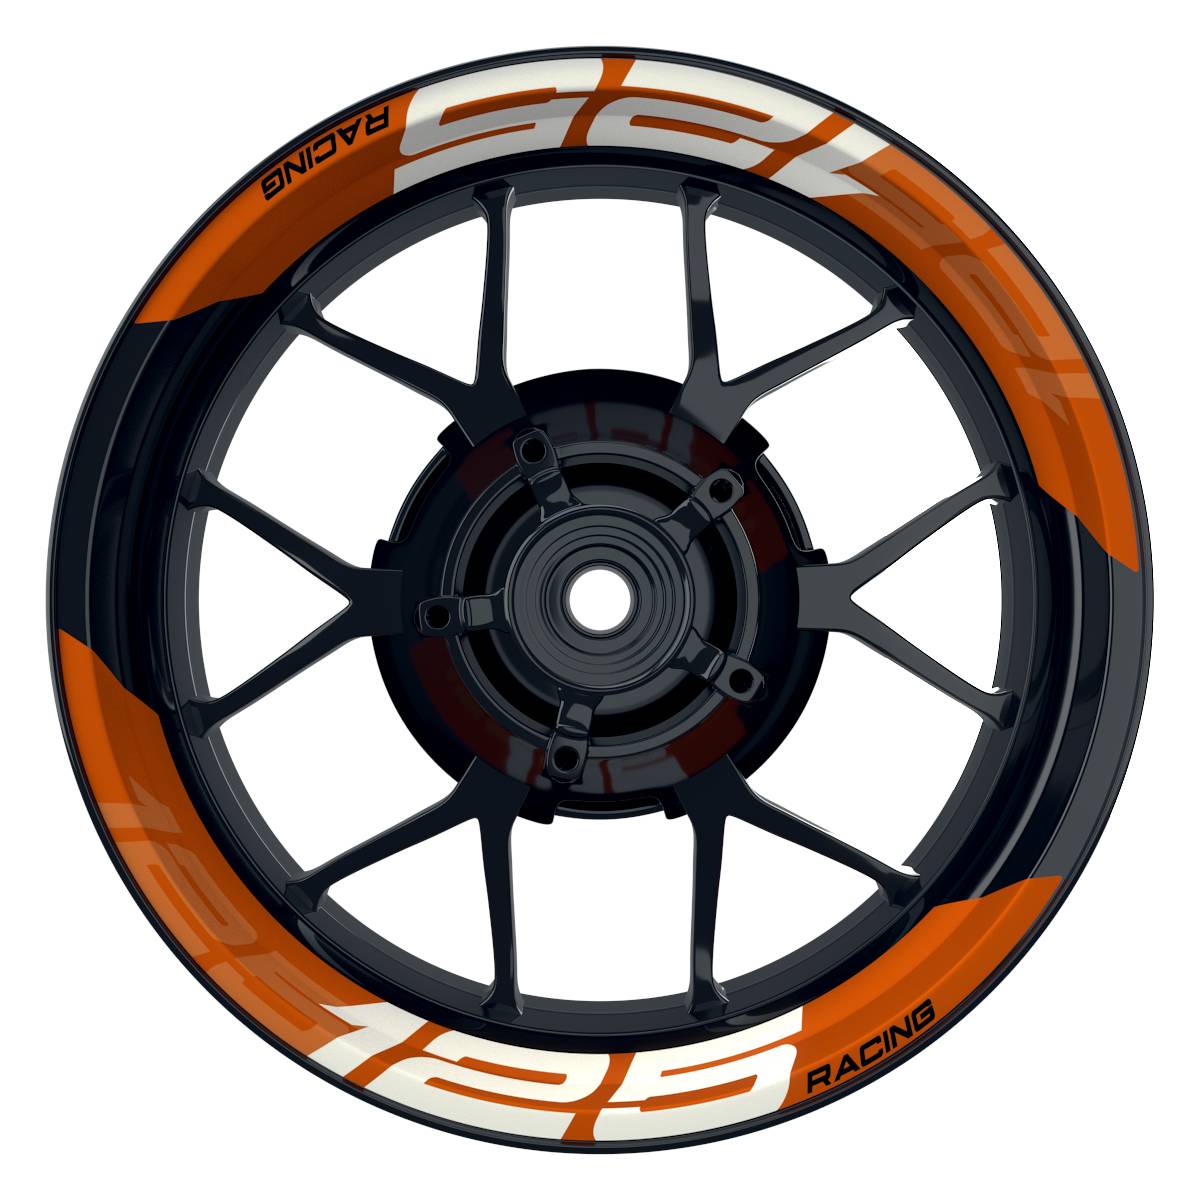 Wheelsticker Felgenaufkleber KTM Racing 125 einfarbig V2 orange Frontansicht